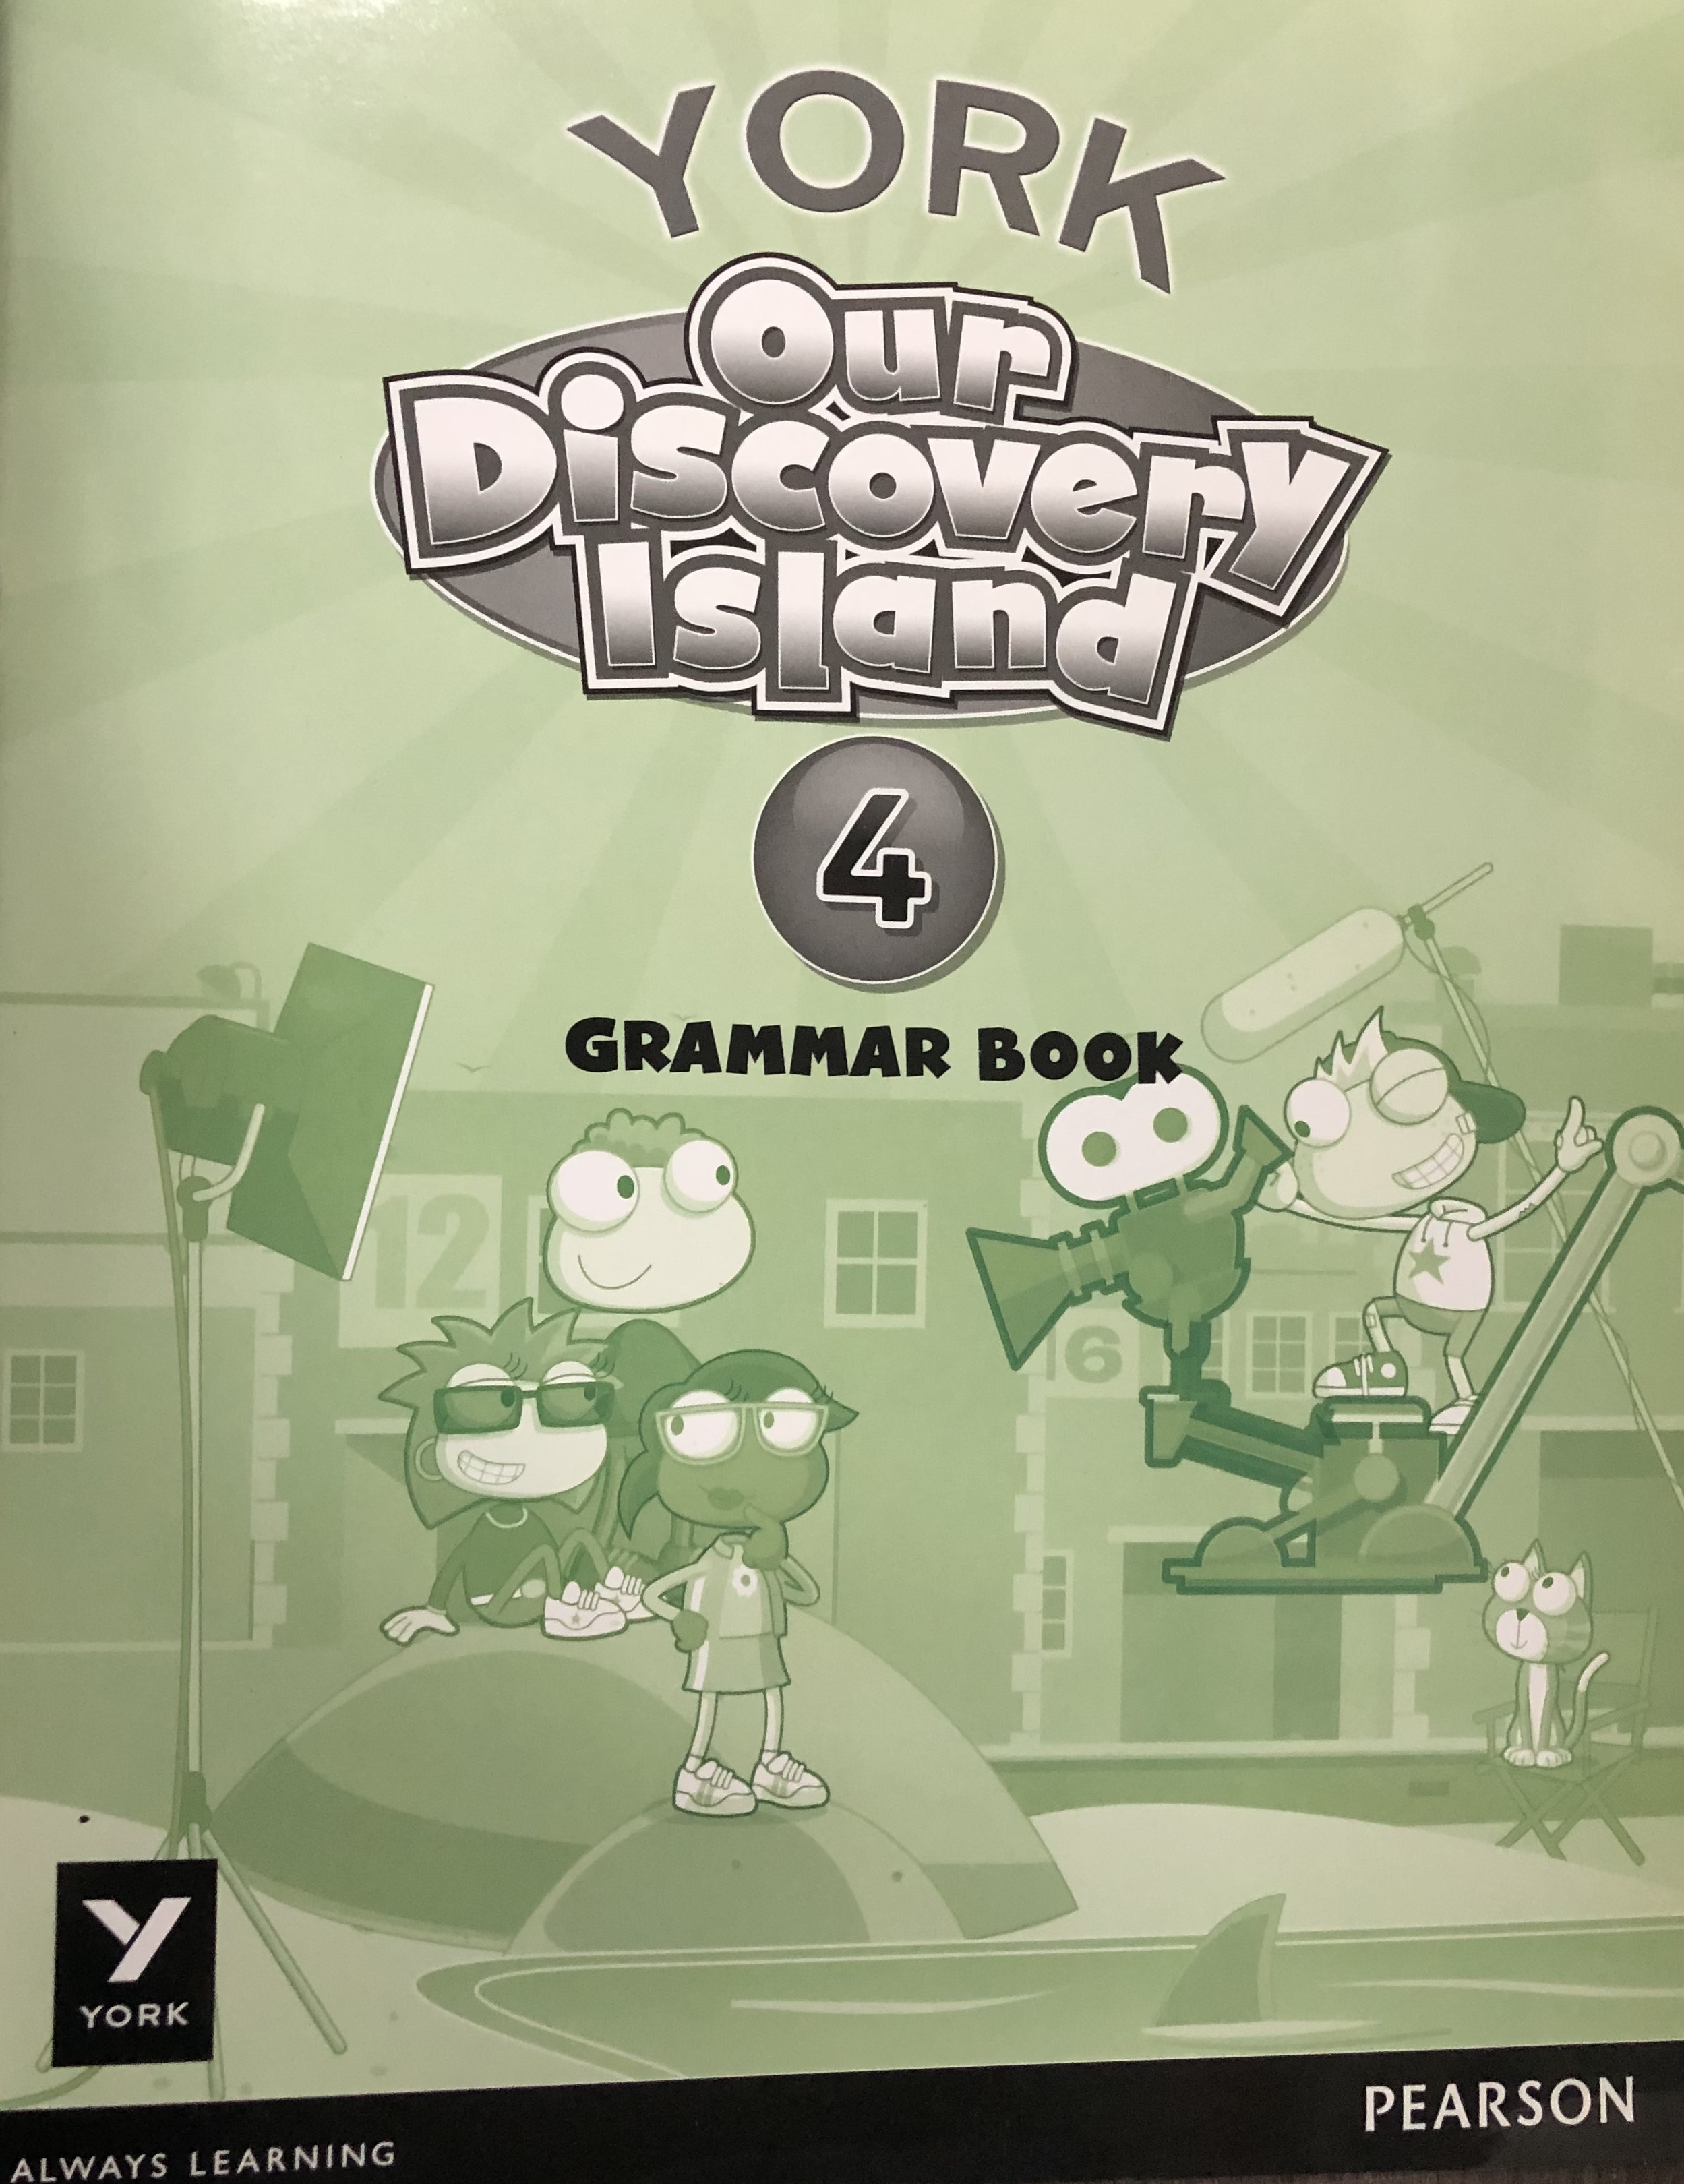 YORK OUR DISCOVERY ISLAND 4 GRAMMAR BOOK - Pearson